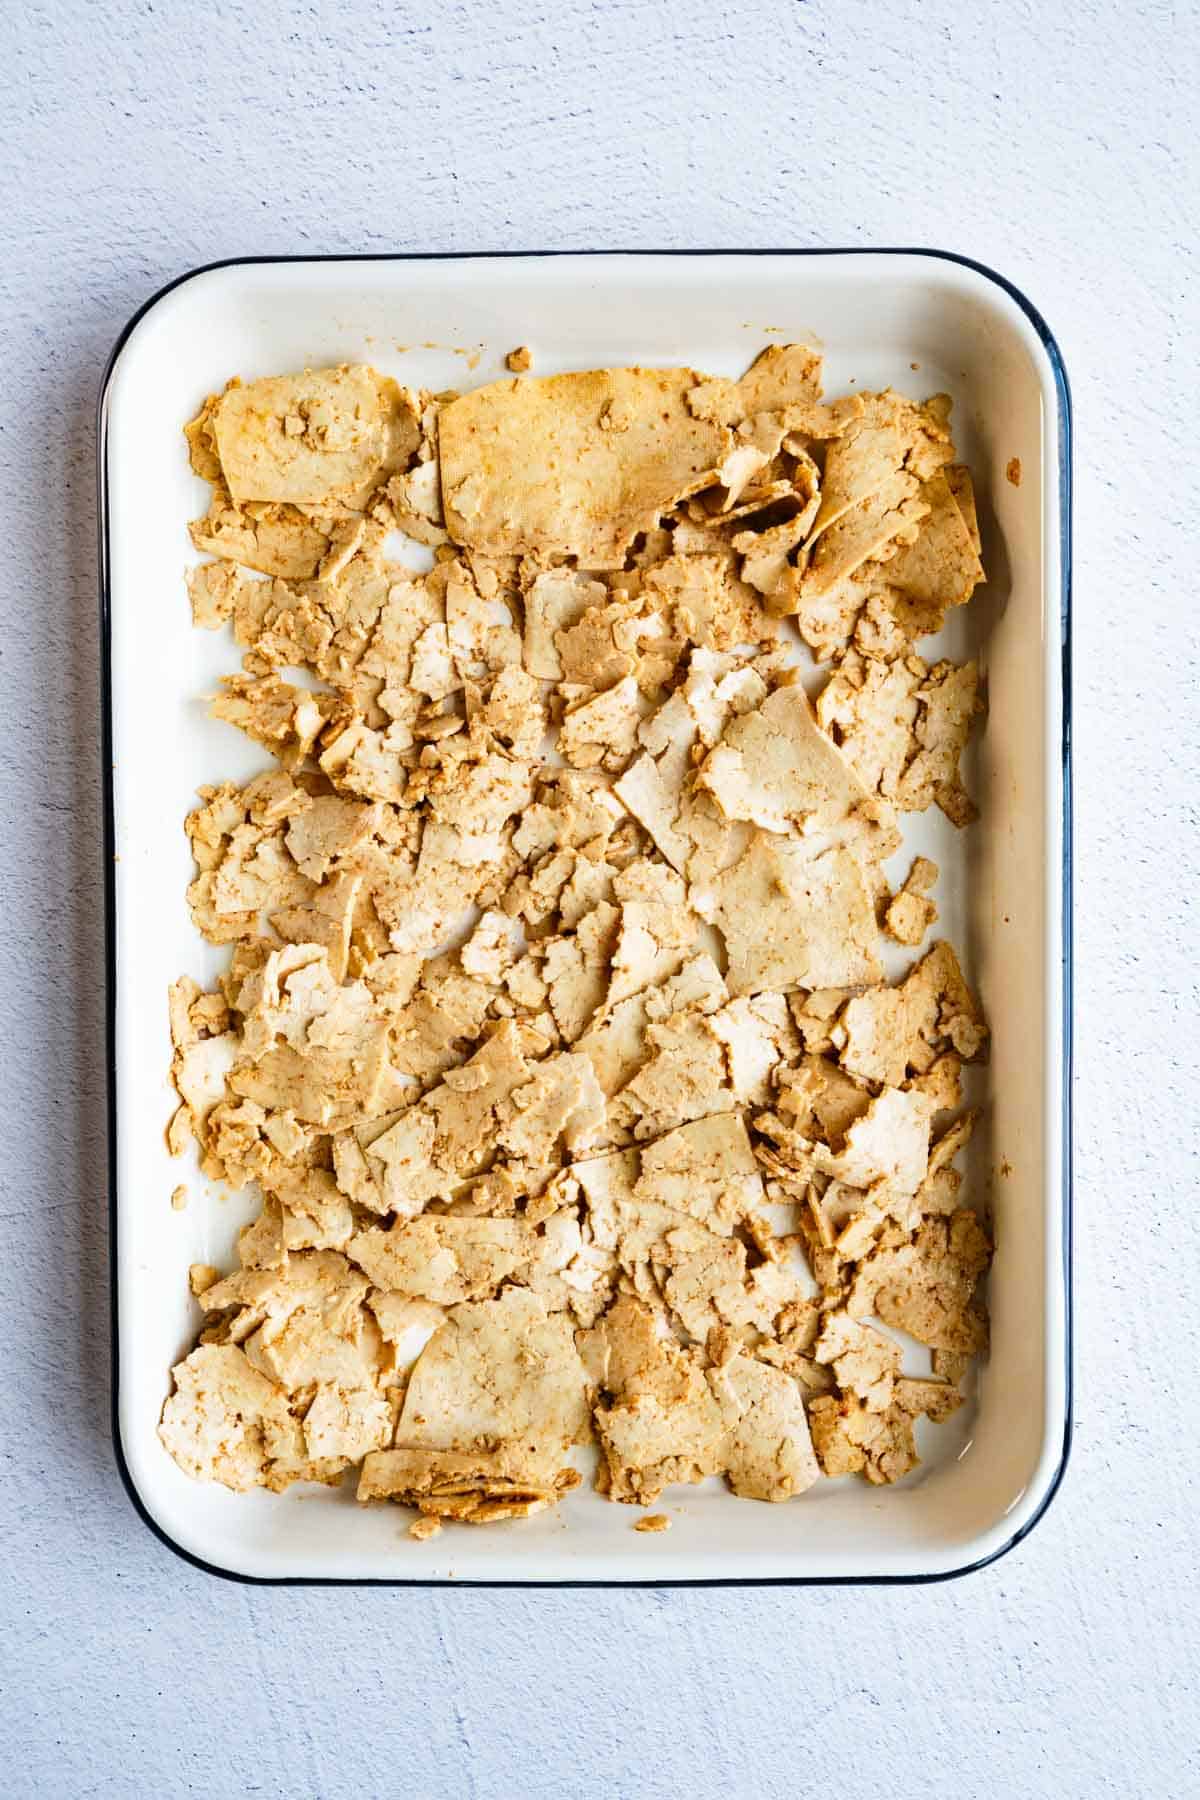 Grated marinated tofu on a white baking sheet.